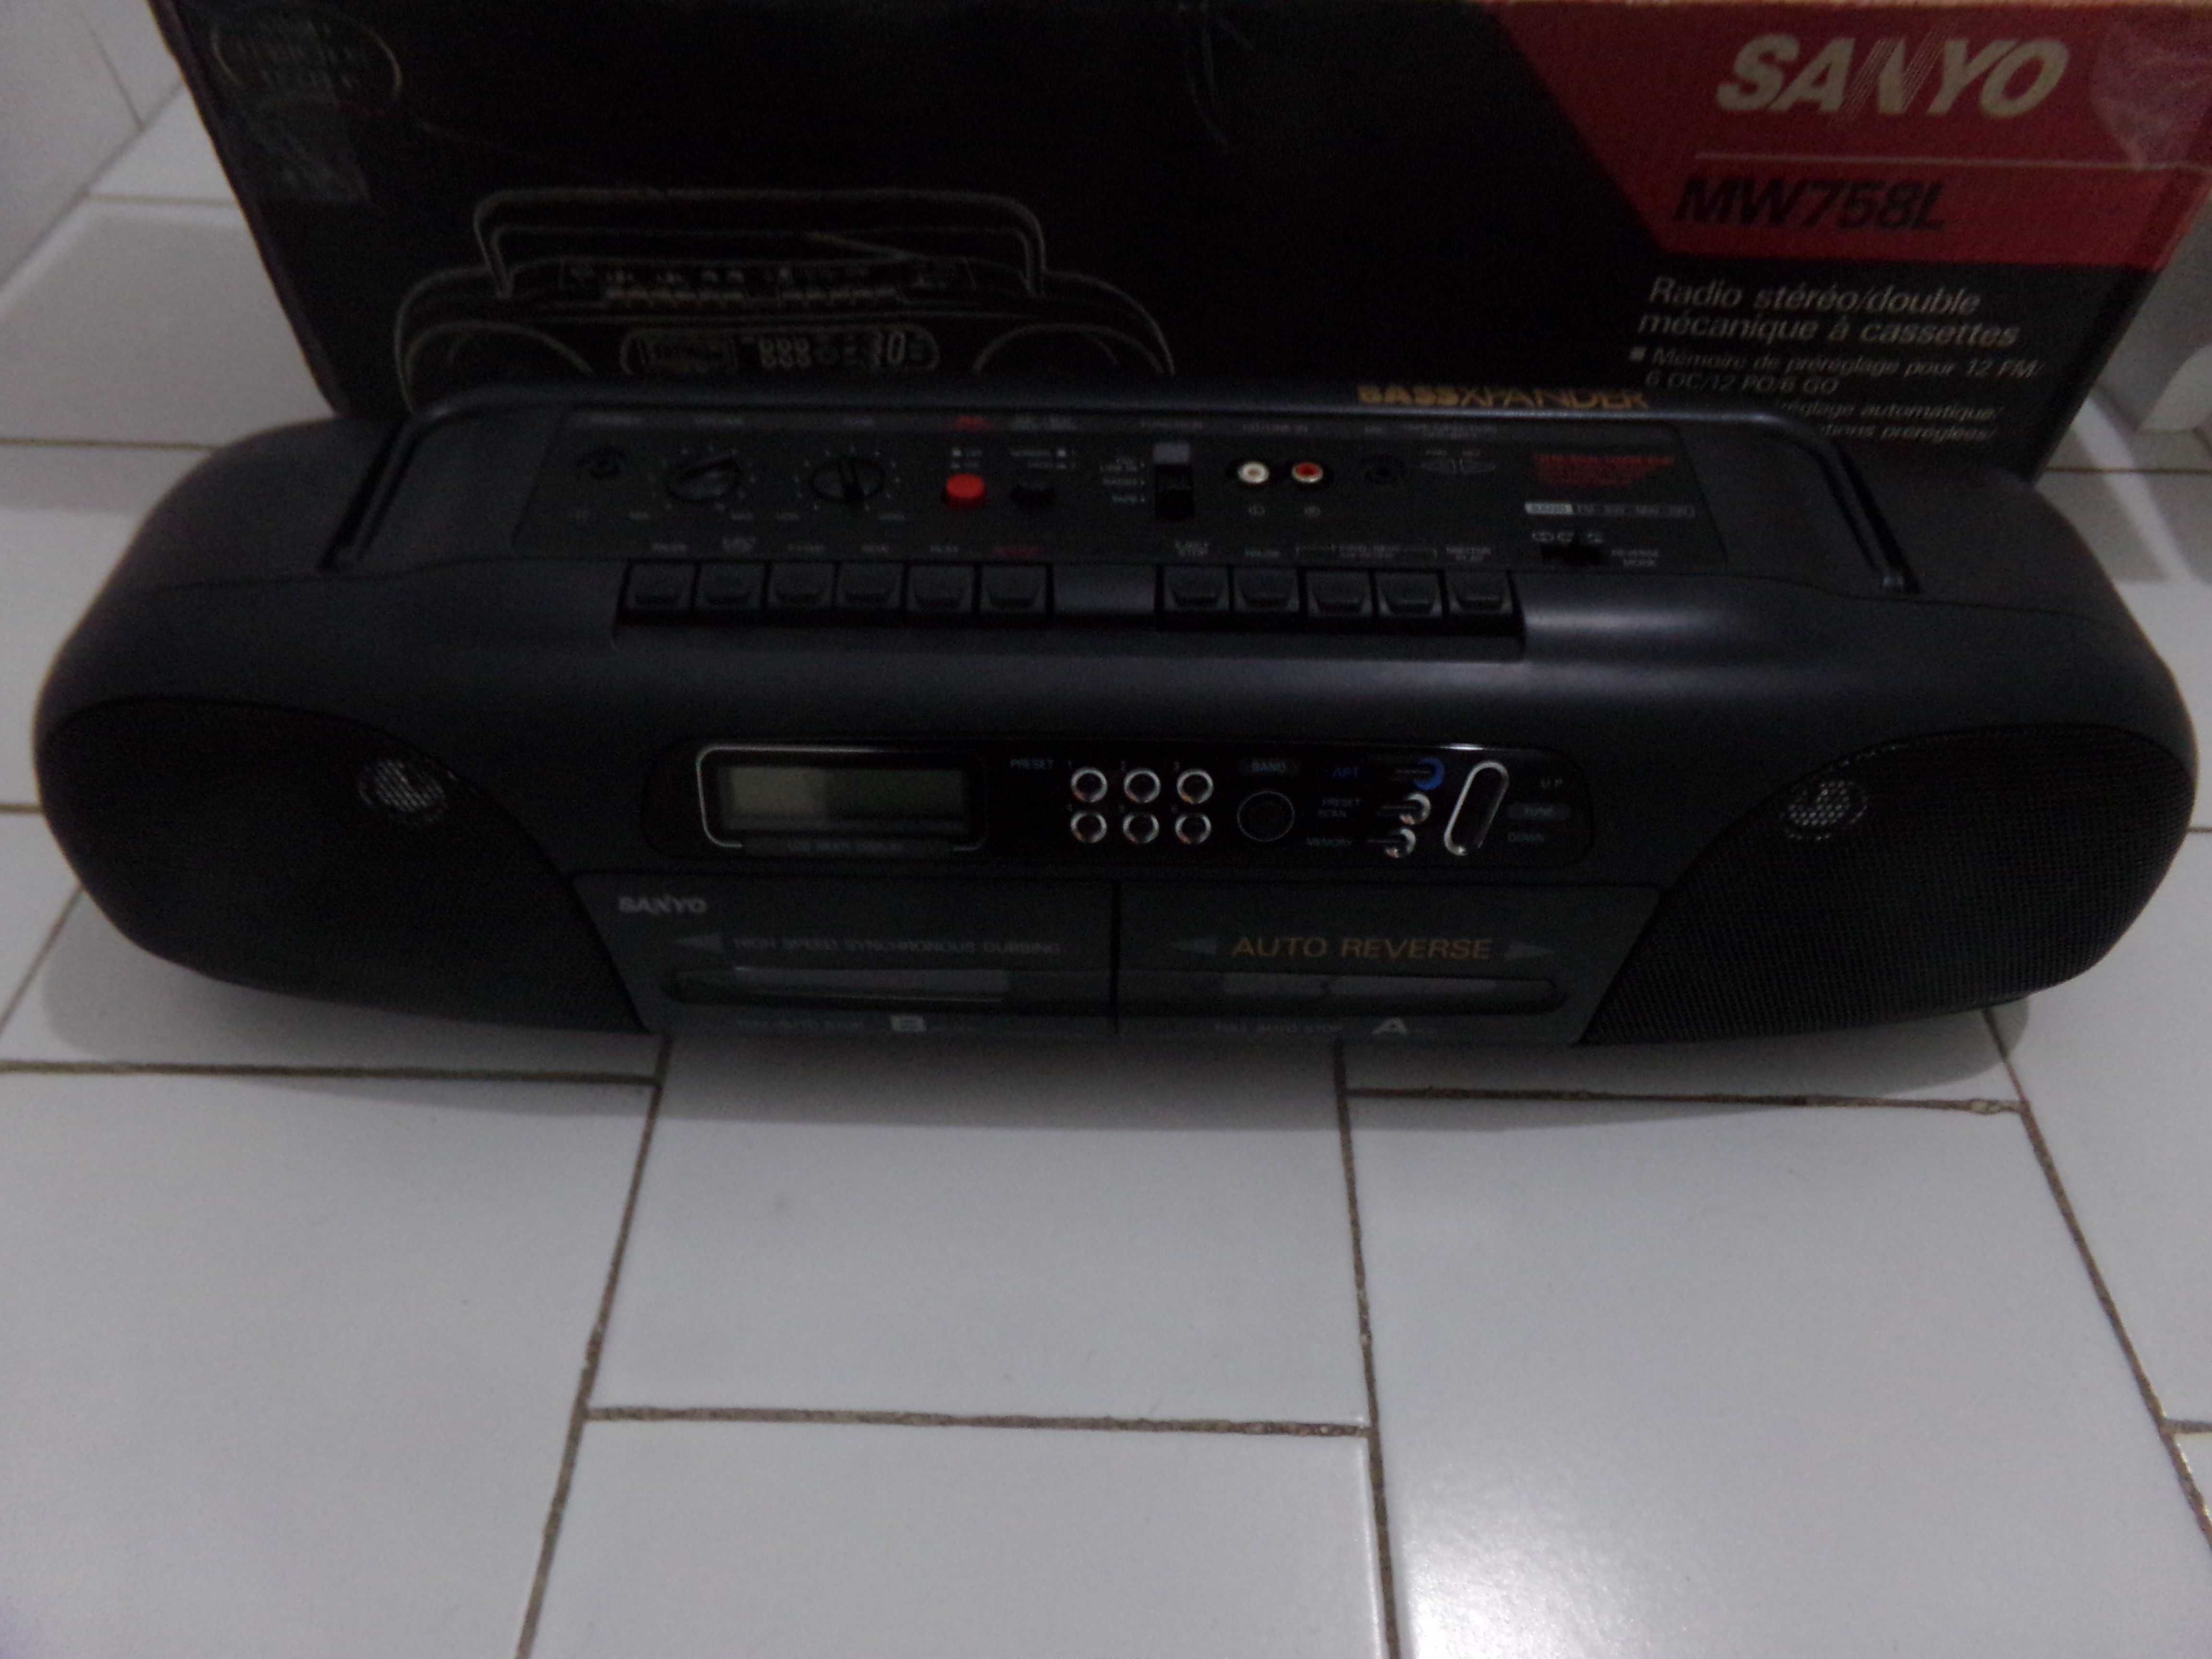 Rádio Portátil Cassete Sanyo MW 758 L Novo (Tijolo-Boombox)